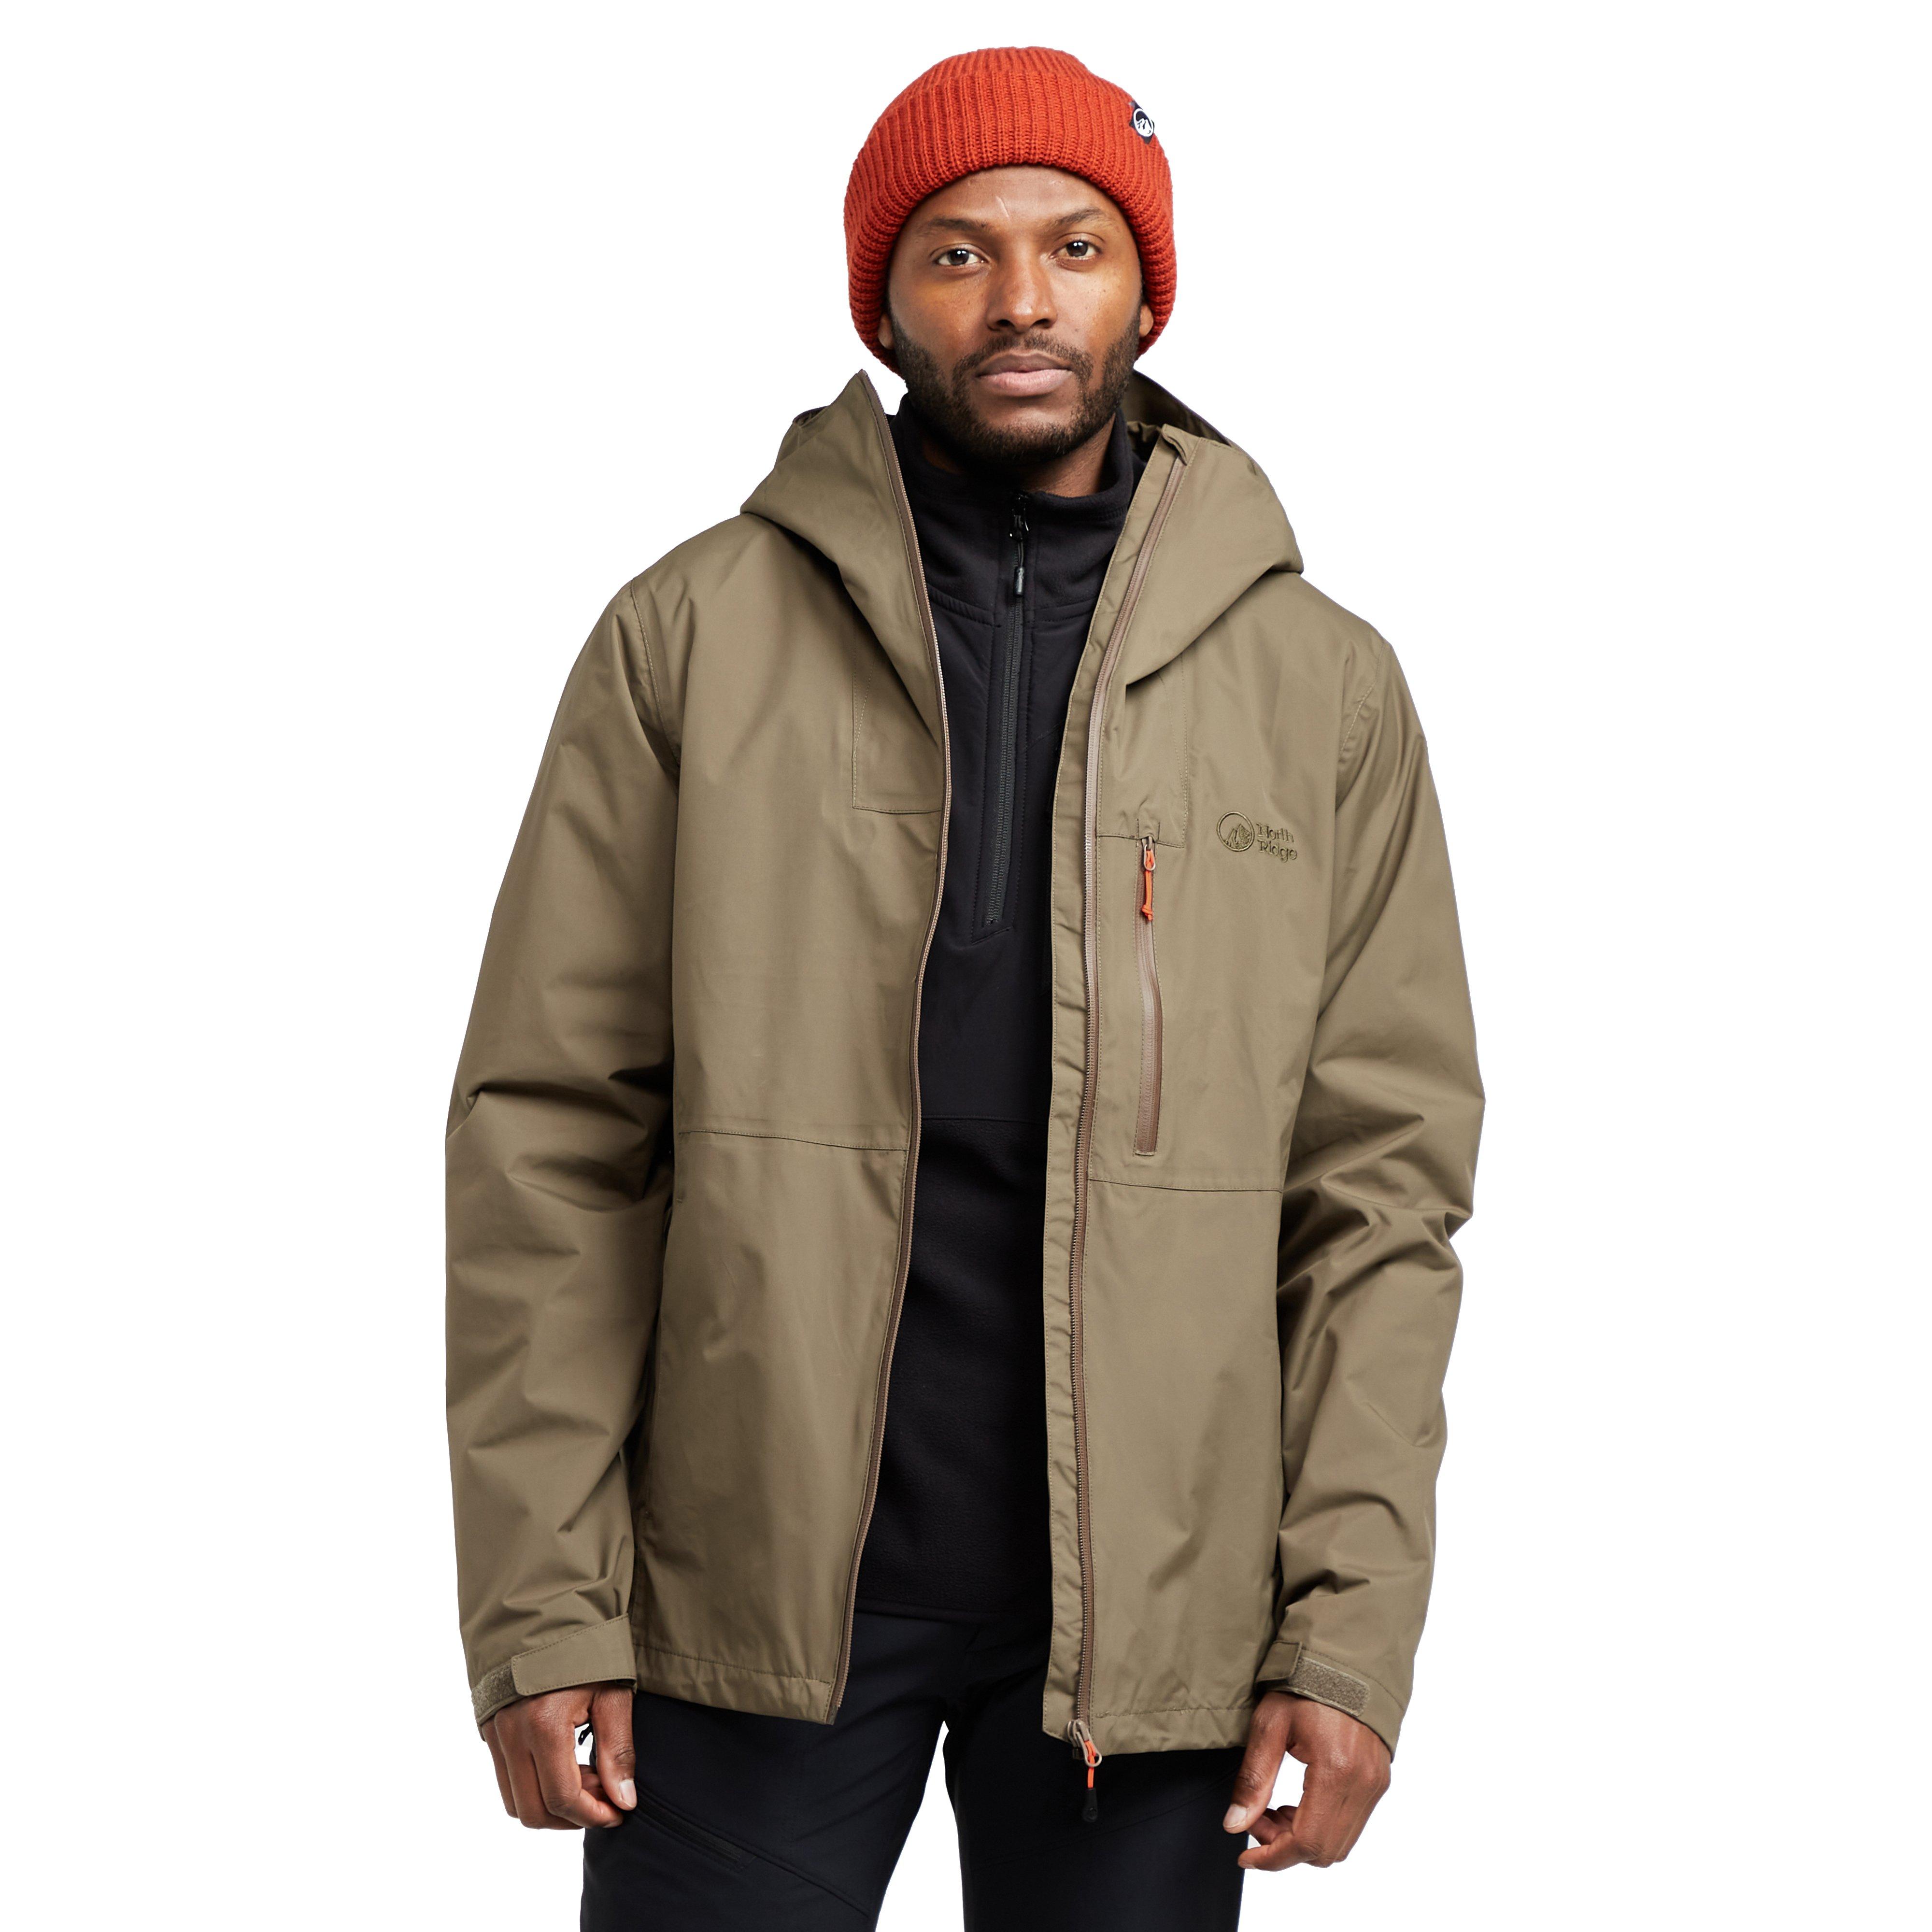 NORTH RIDGE Men’s Waterproof Comfortable Shoalwater 2.0 Jacket with Peaked Hood